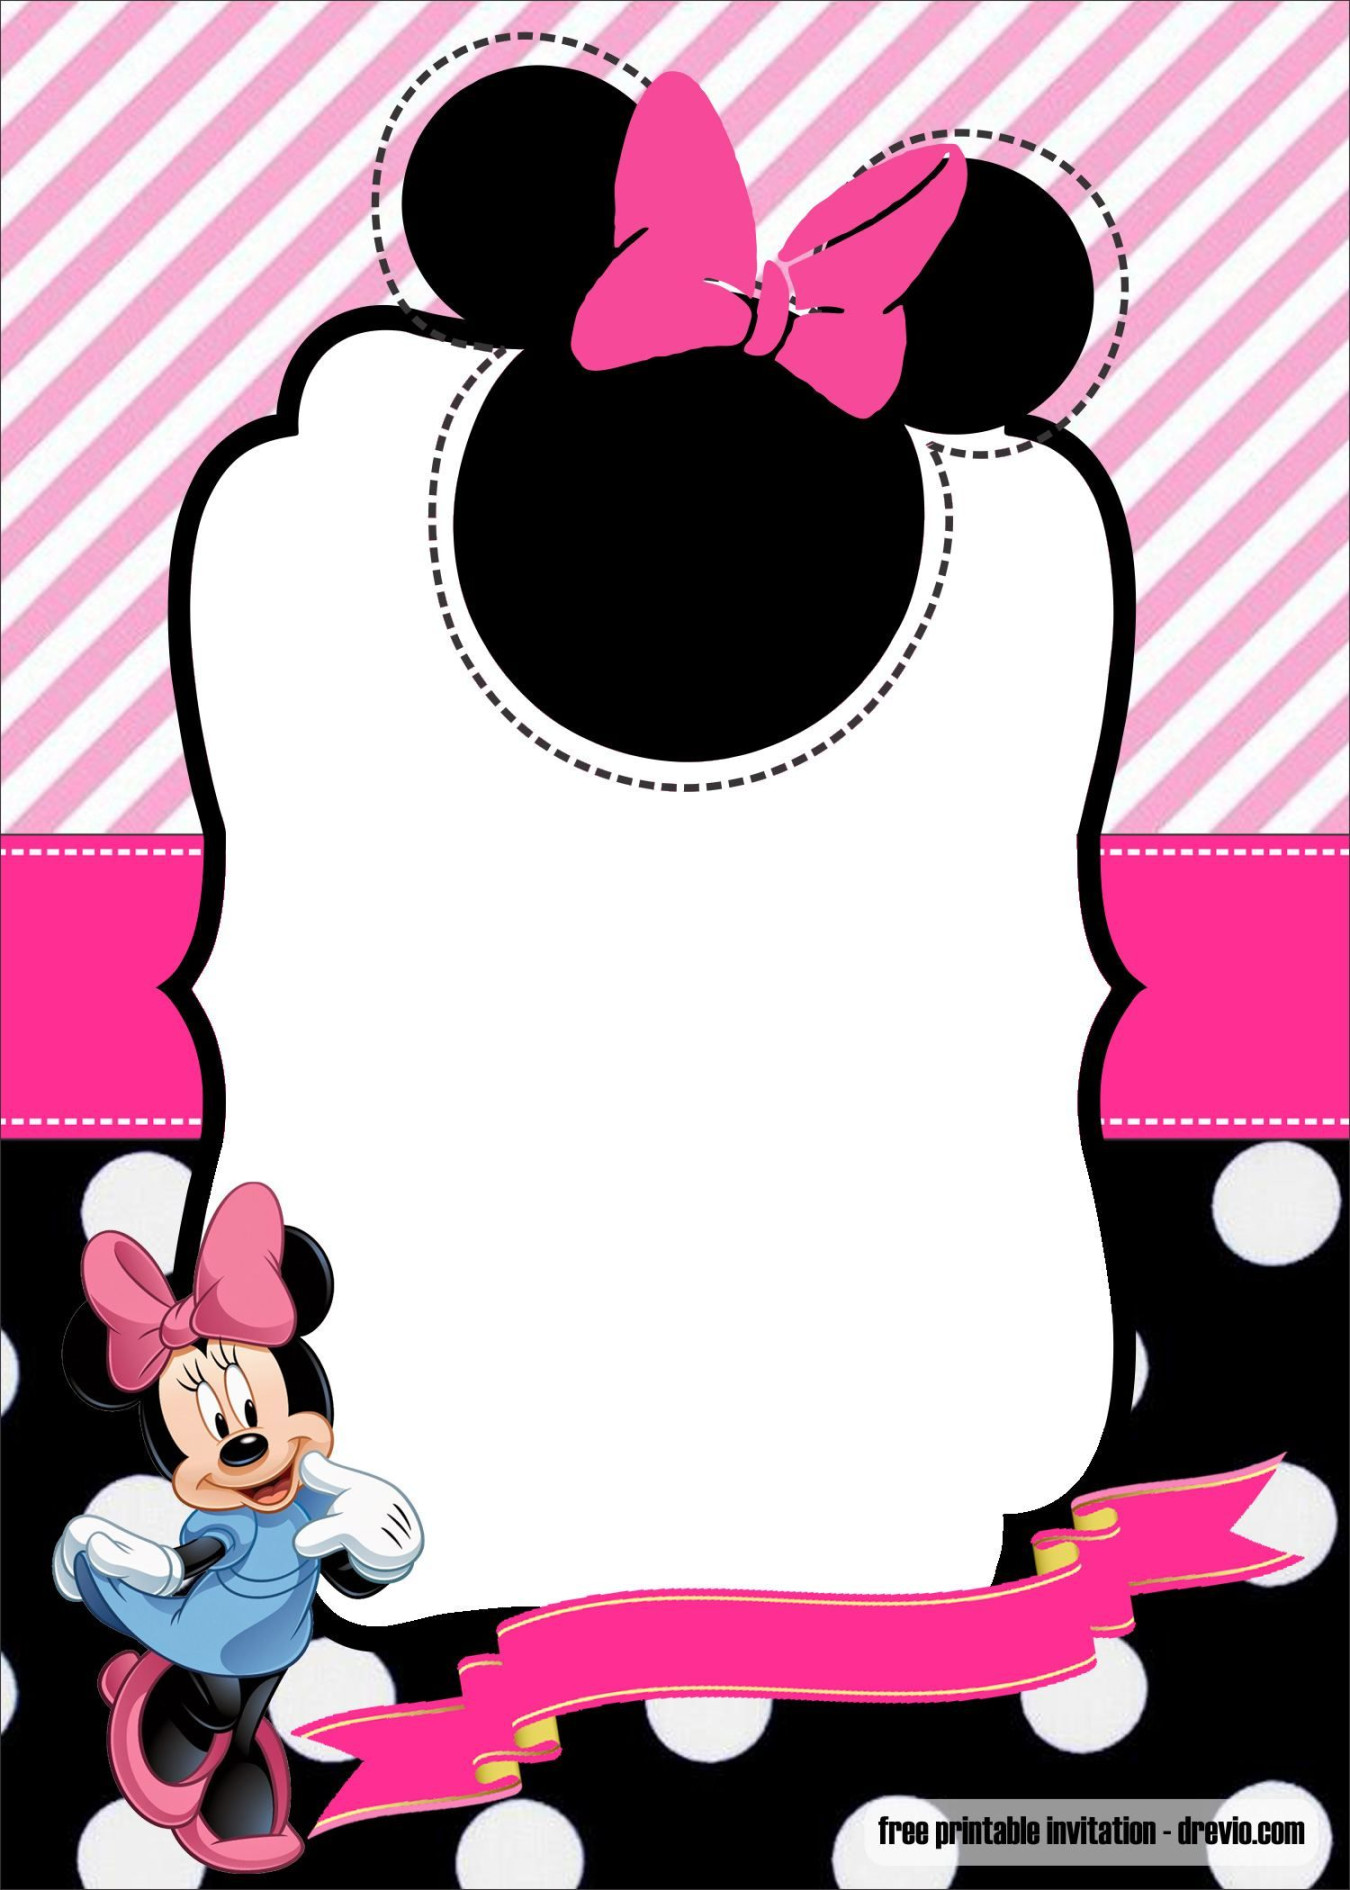 FREE Minnie Mouse st birthday invitation template